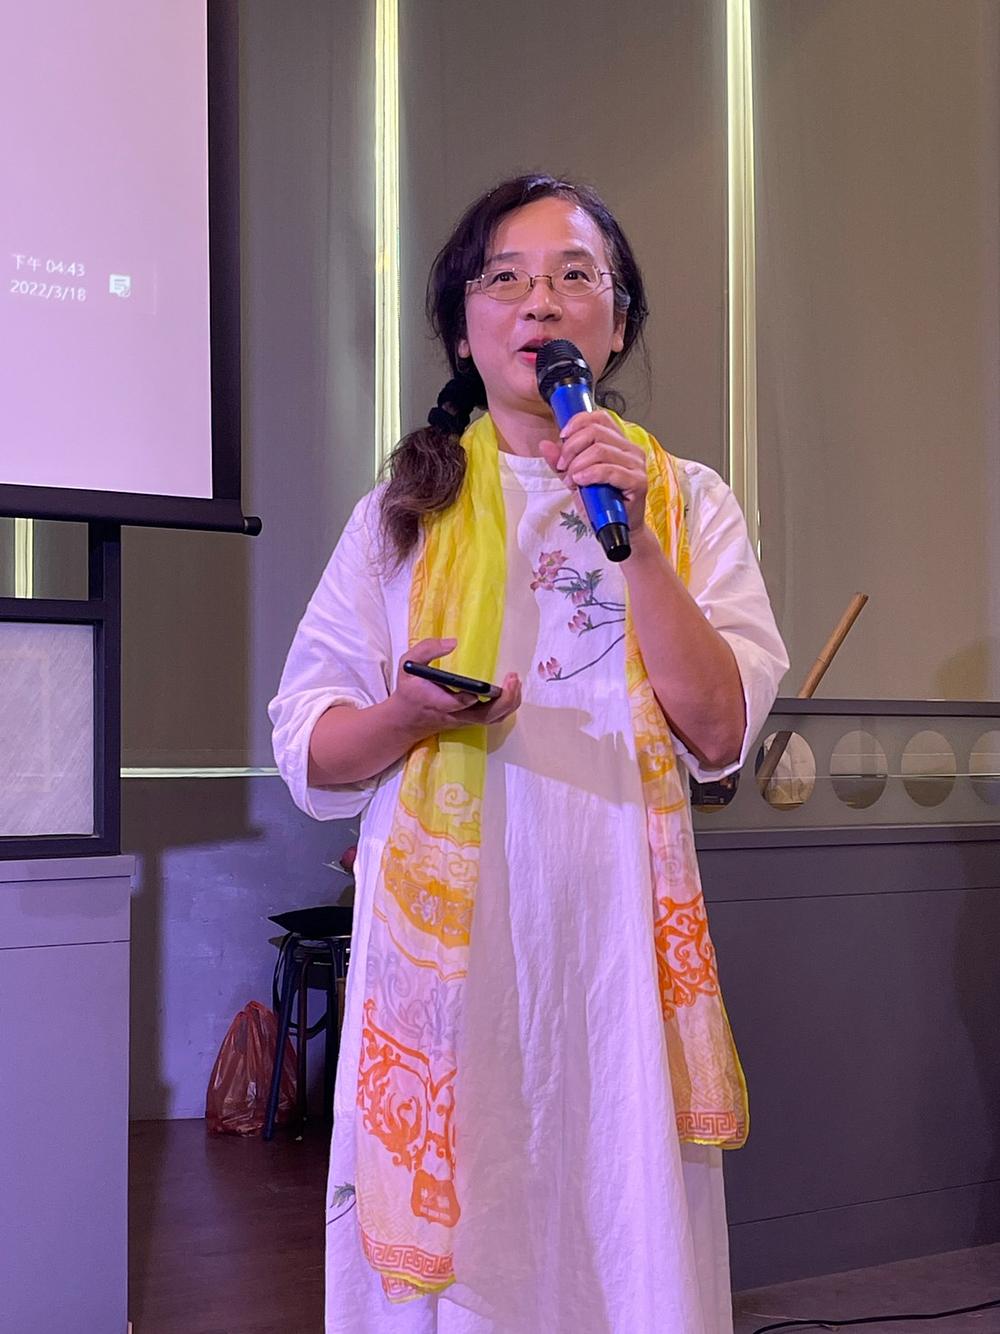  Venli održava muzičke forume kako bi promovisala Shen Yun i govorila ljudima o Falun Dafi.